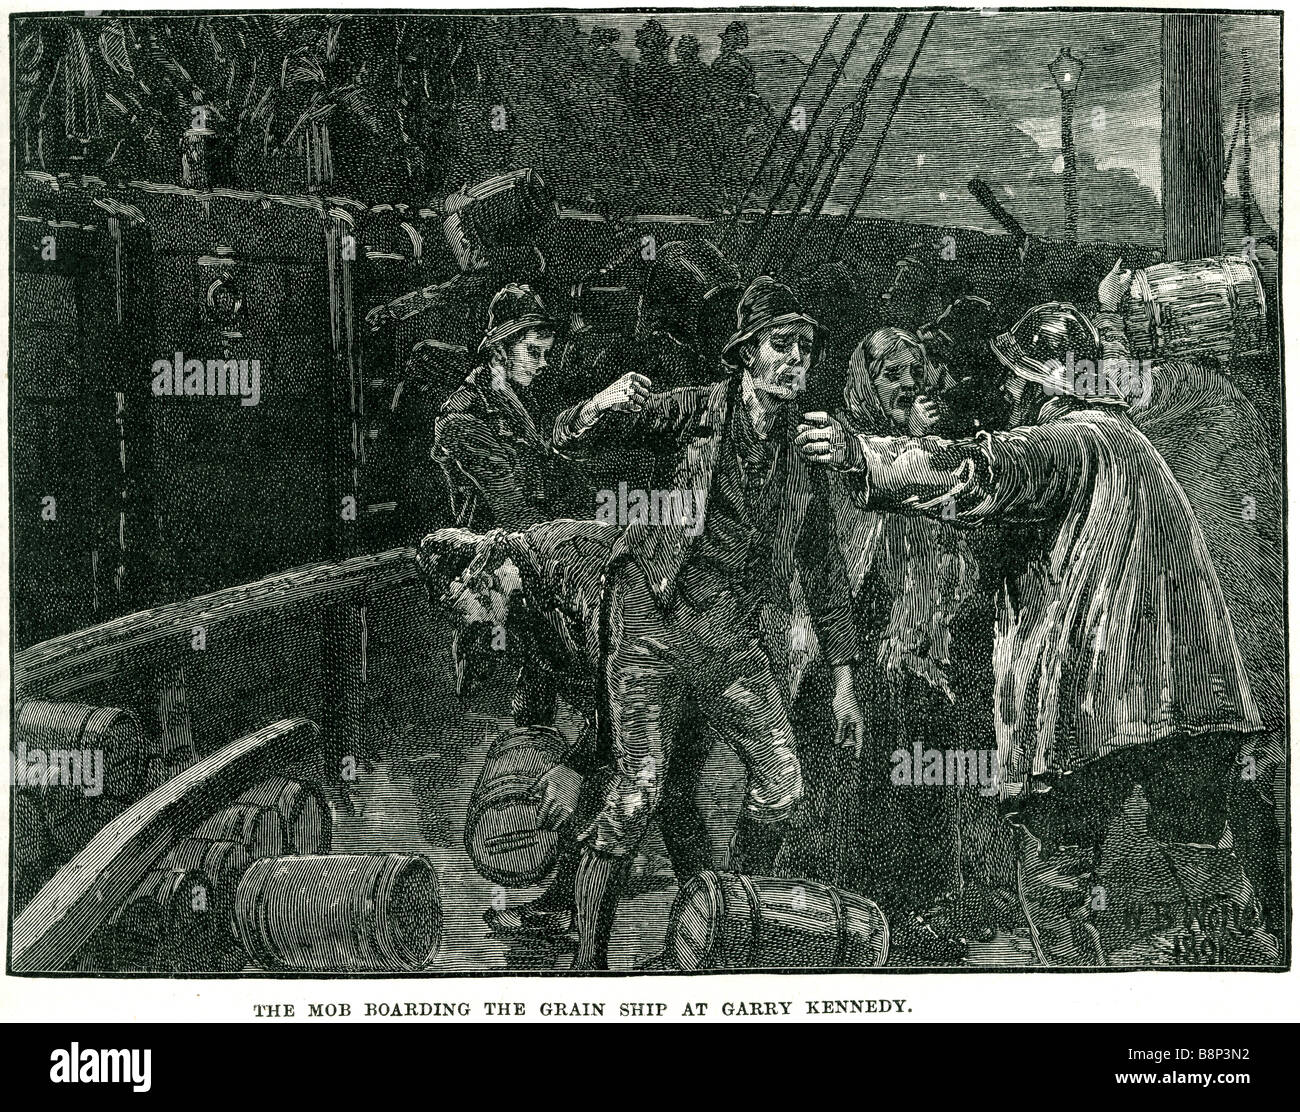 mob boarding the grain ship at garry kennedy 1841 The Anti-Corn ...